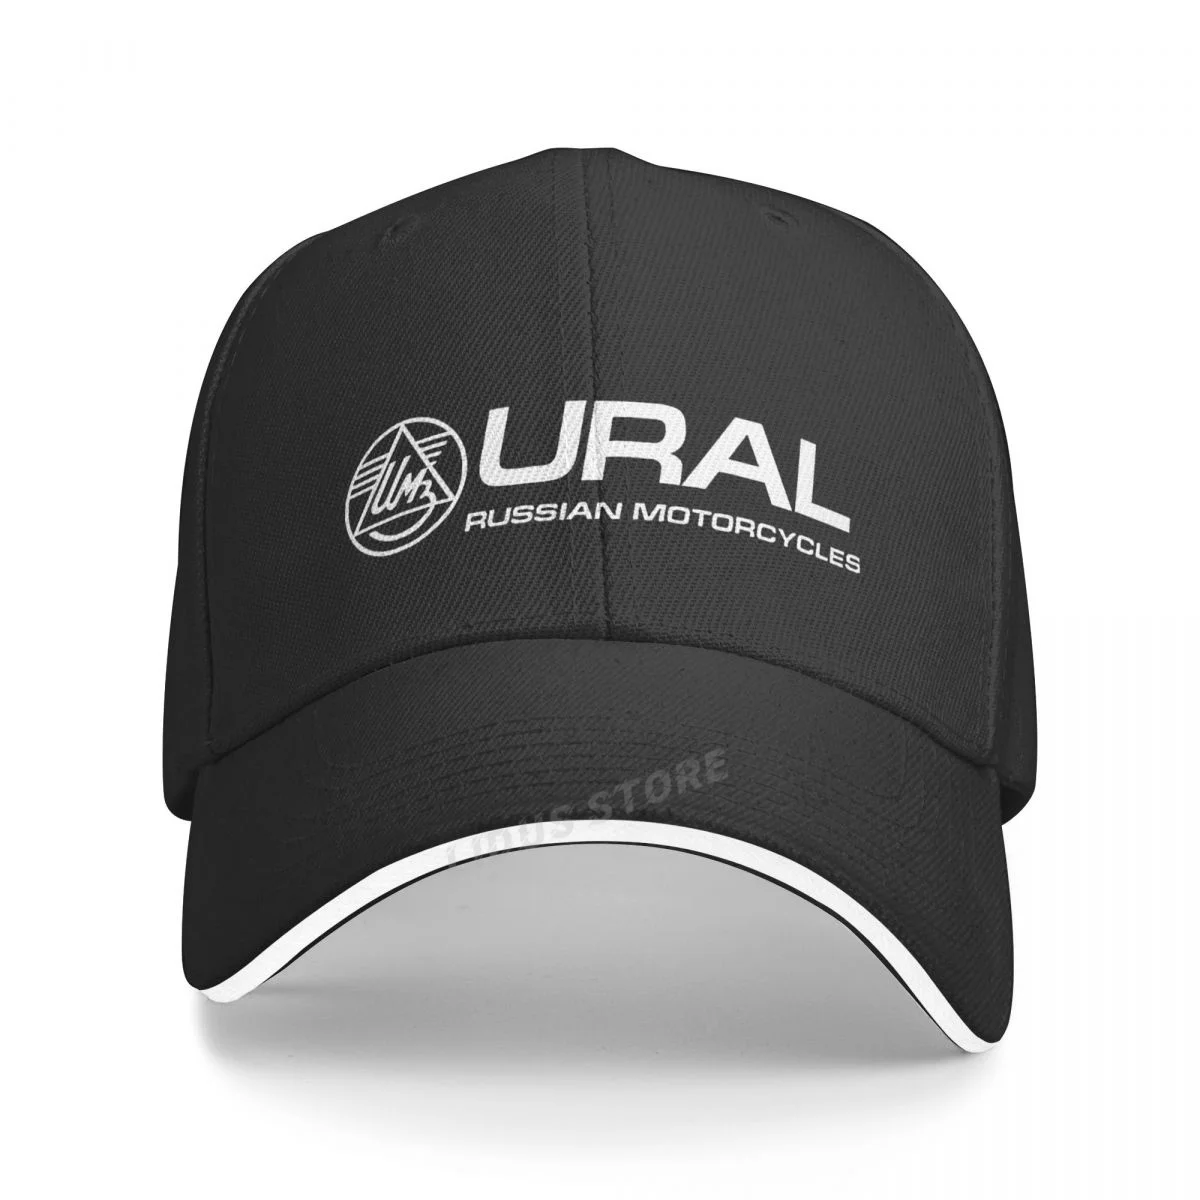 Ural Russian Motorcycles Baseball Caps Women And Men Casual Adjustable Ural Letter Printed Hats Dad Cap